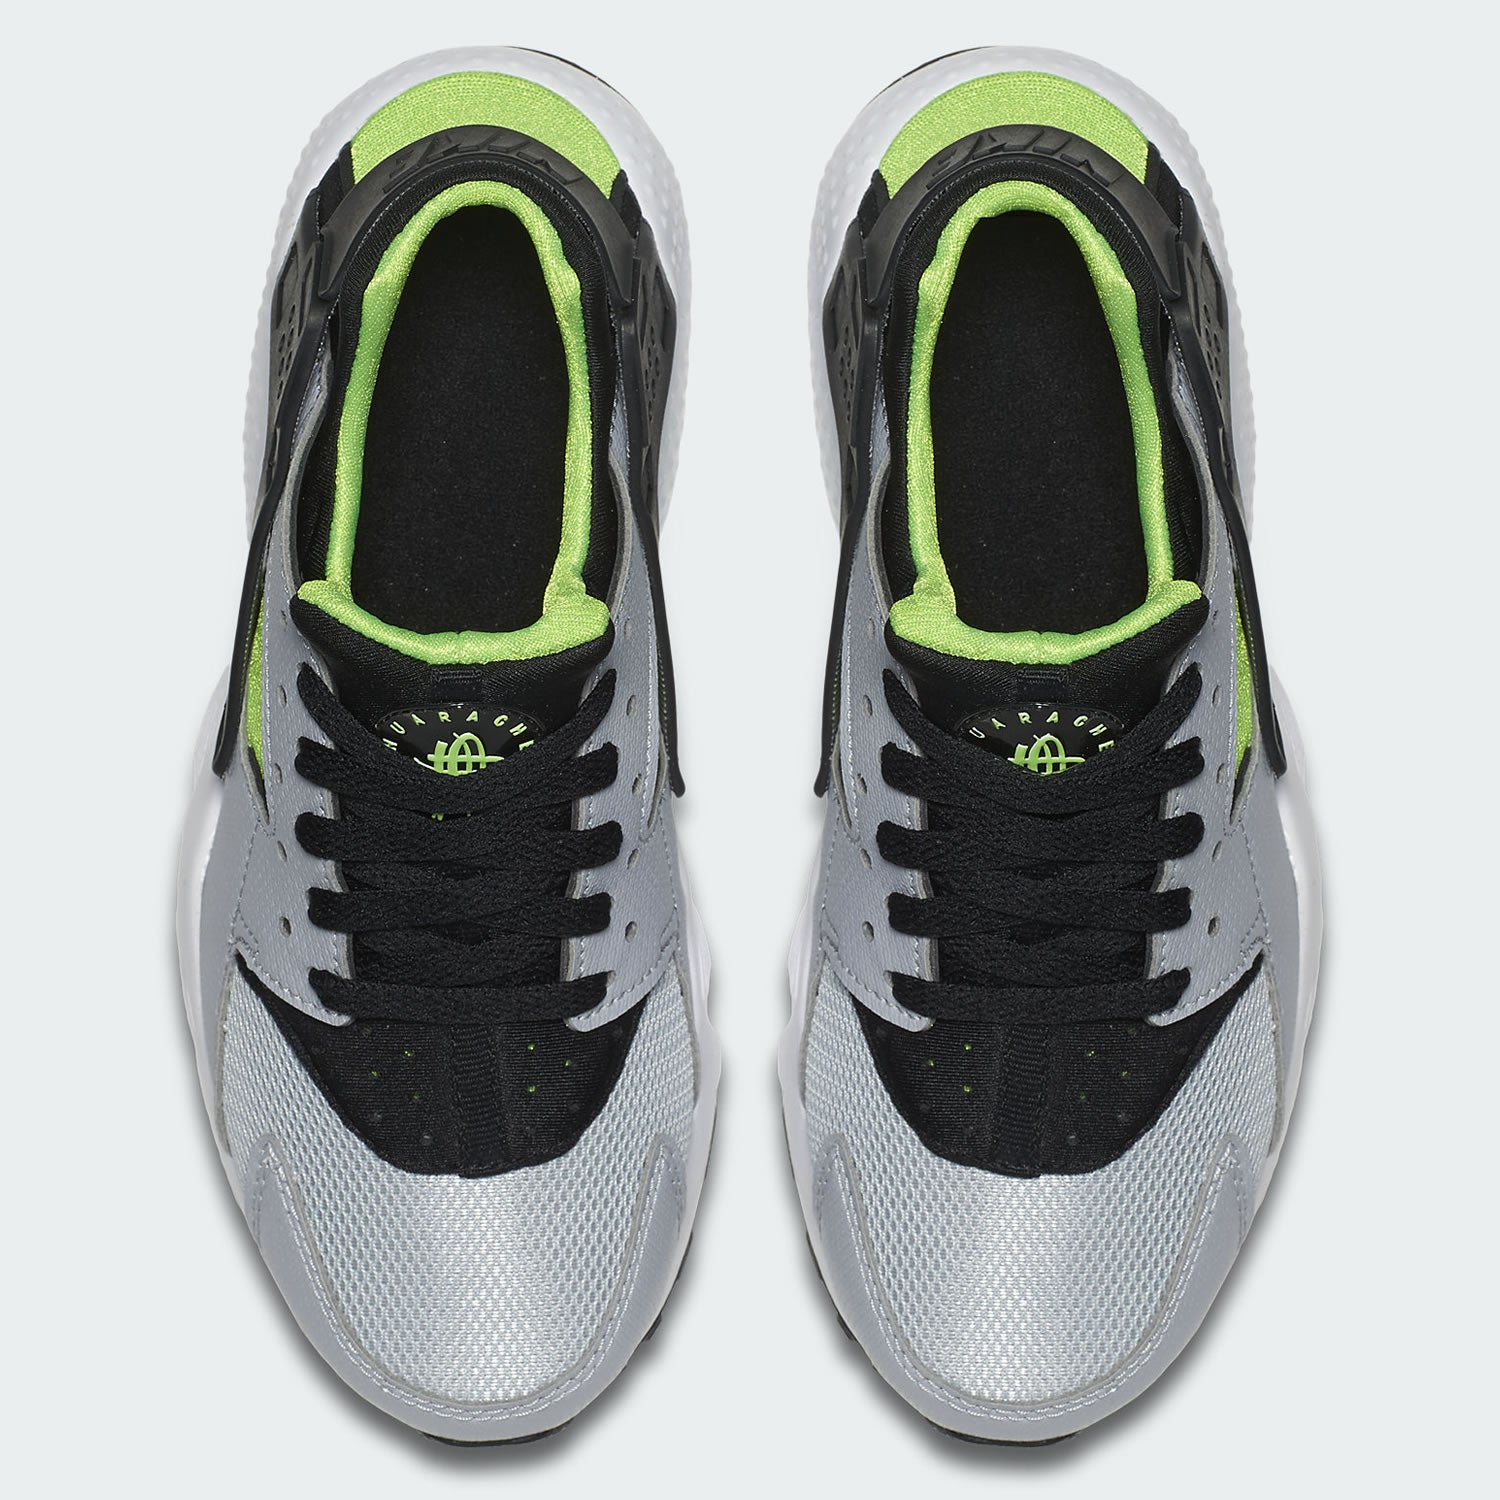 tradesports.co.uk Nike Juniors Huarache Run Shoes 654275 015